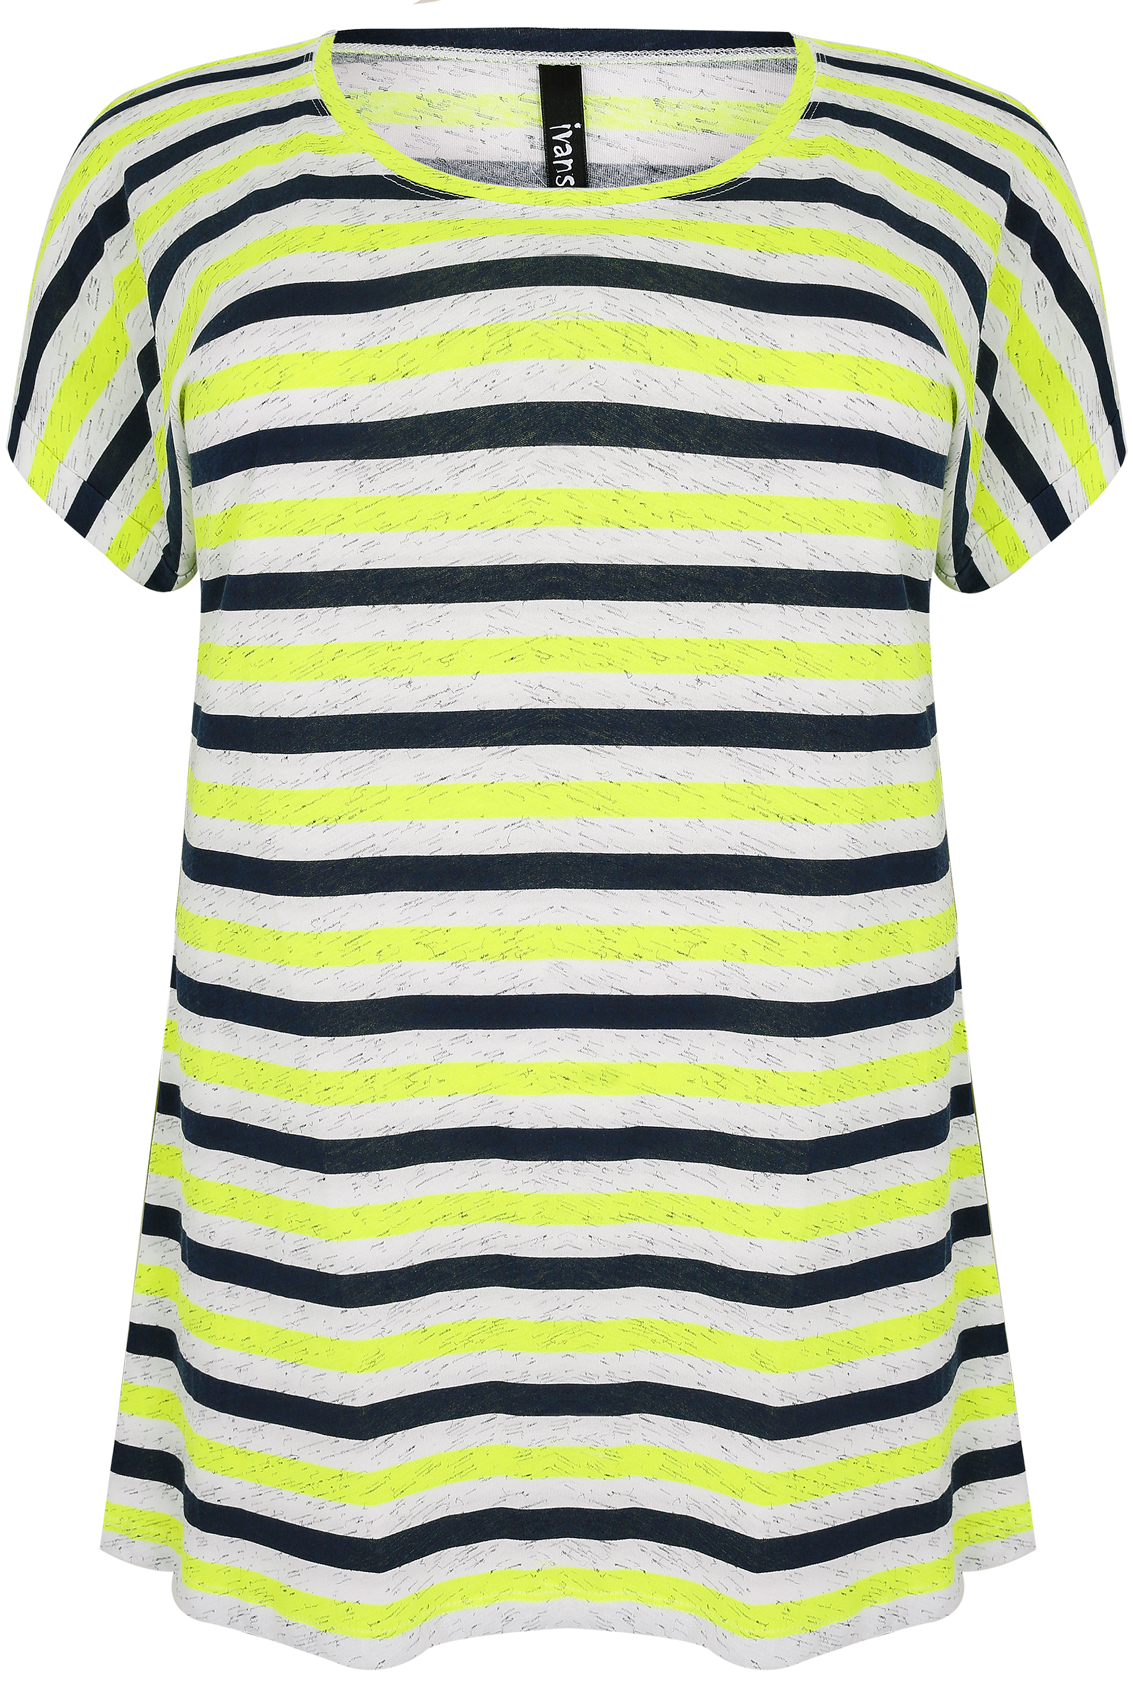 White, Black & Yellow Stripe Top With Scoop Neckline, Plus size 16 to 36